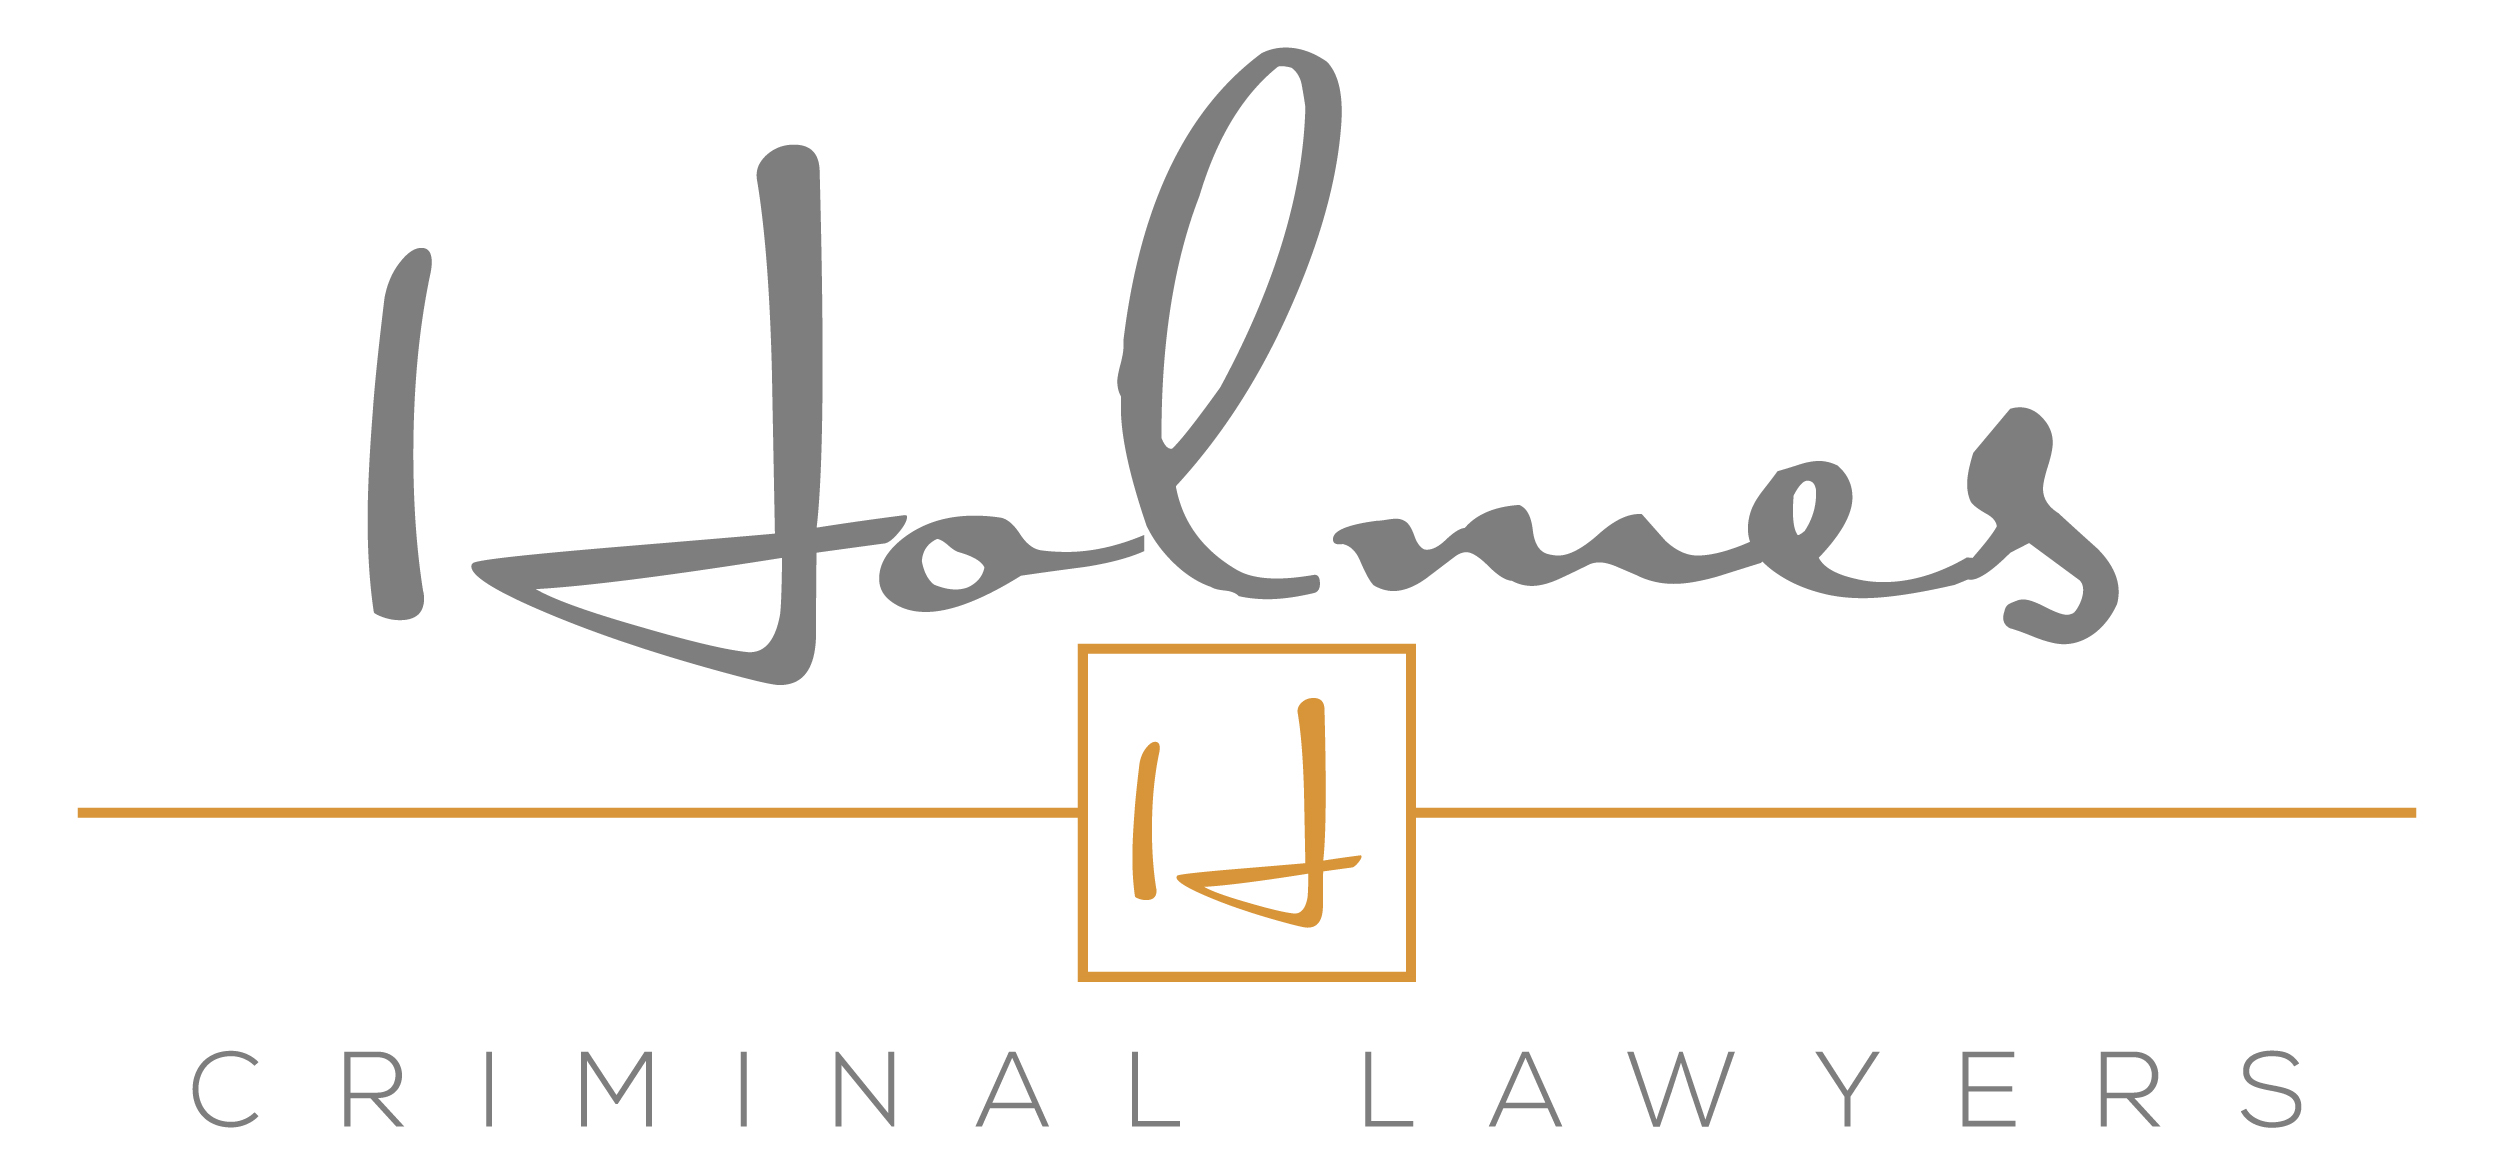 Holmes Criminal Lawyers